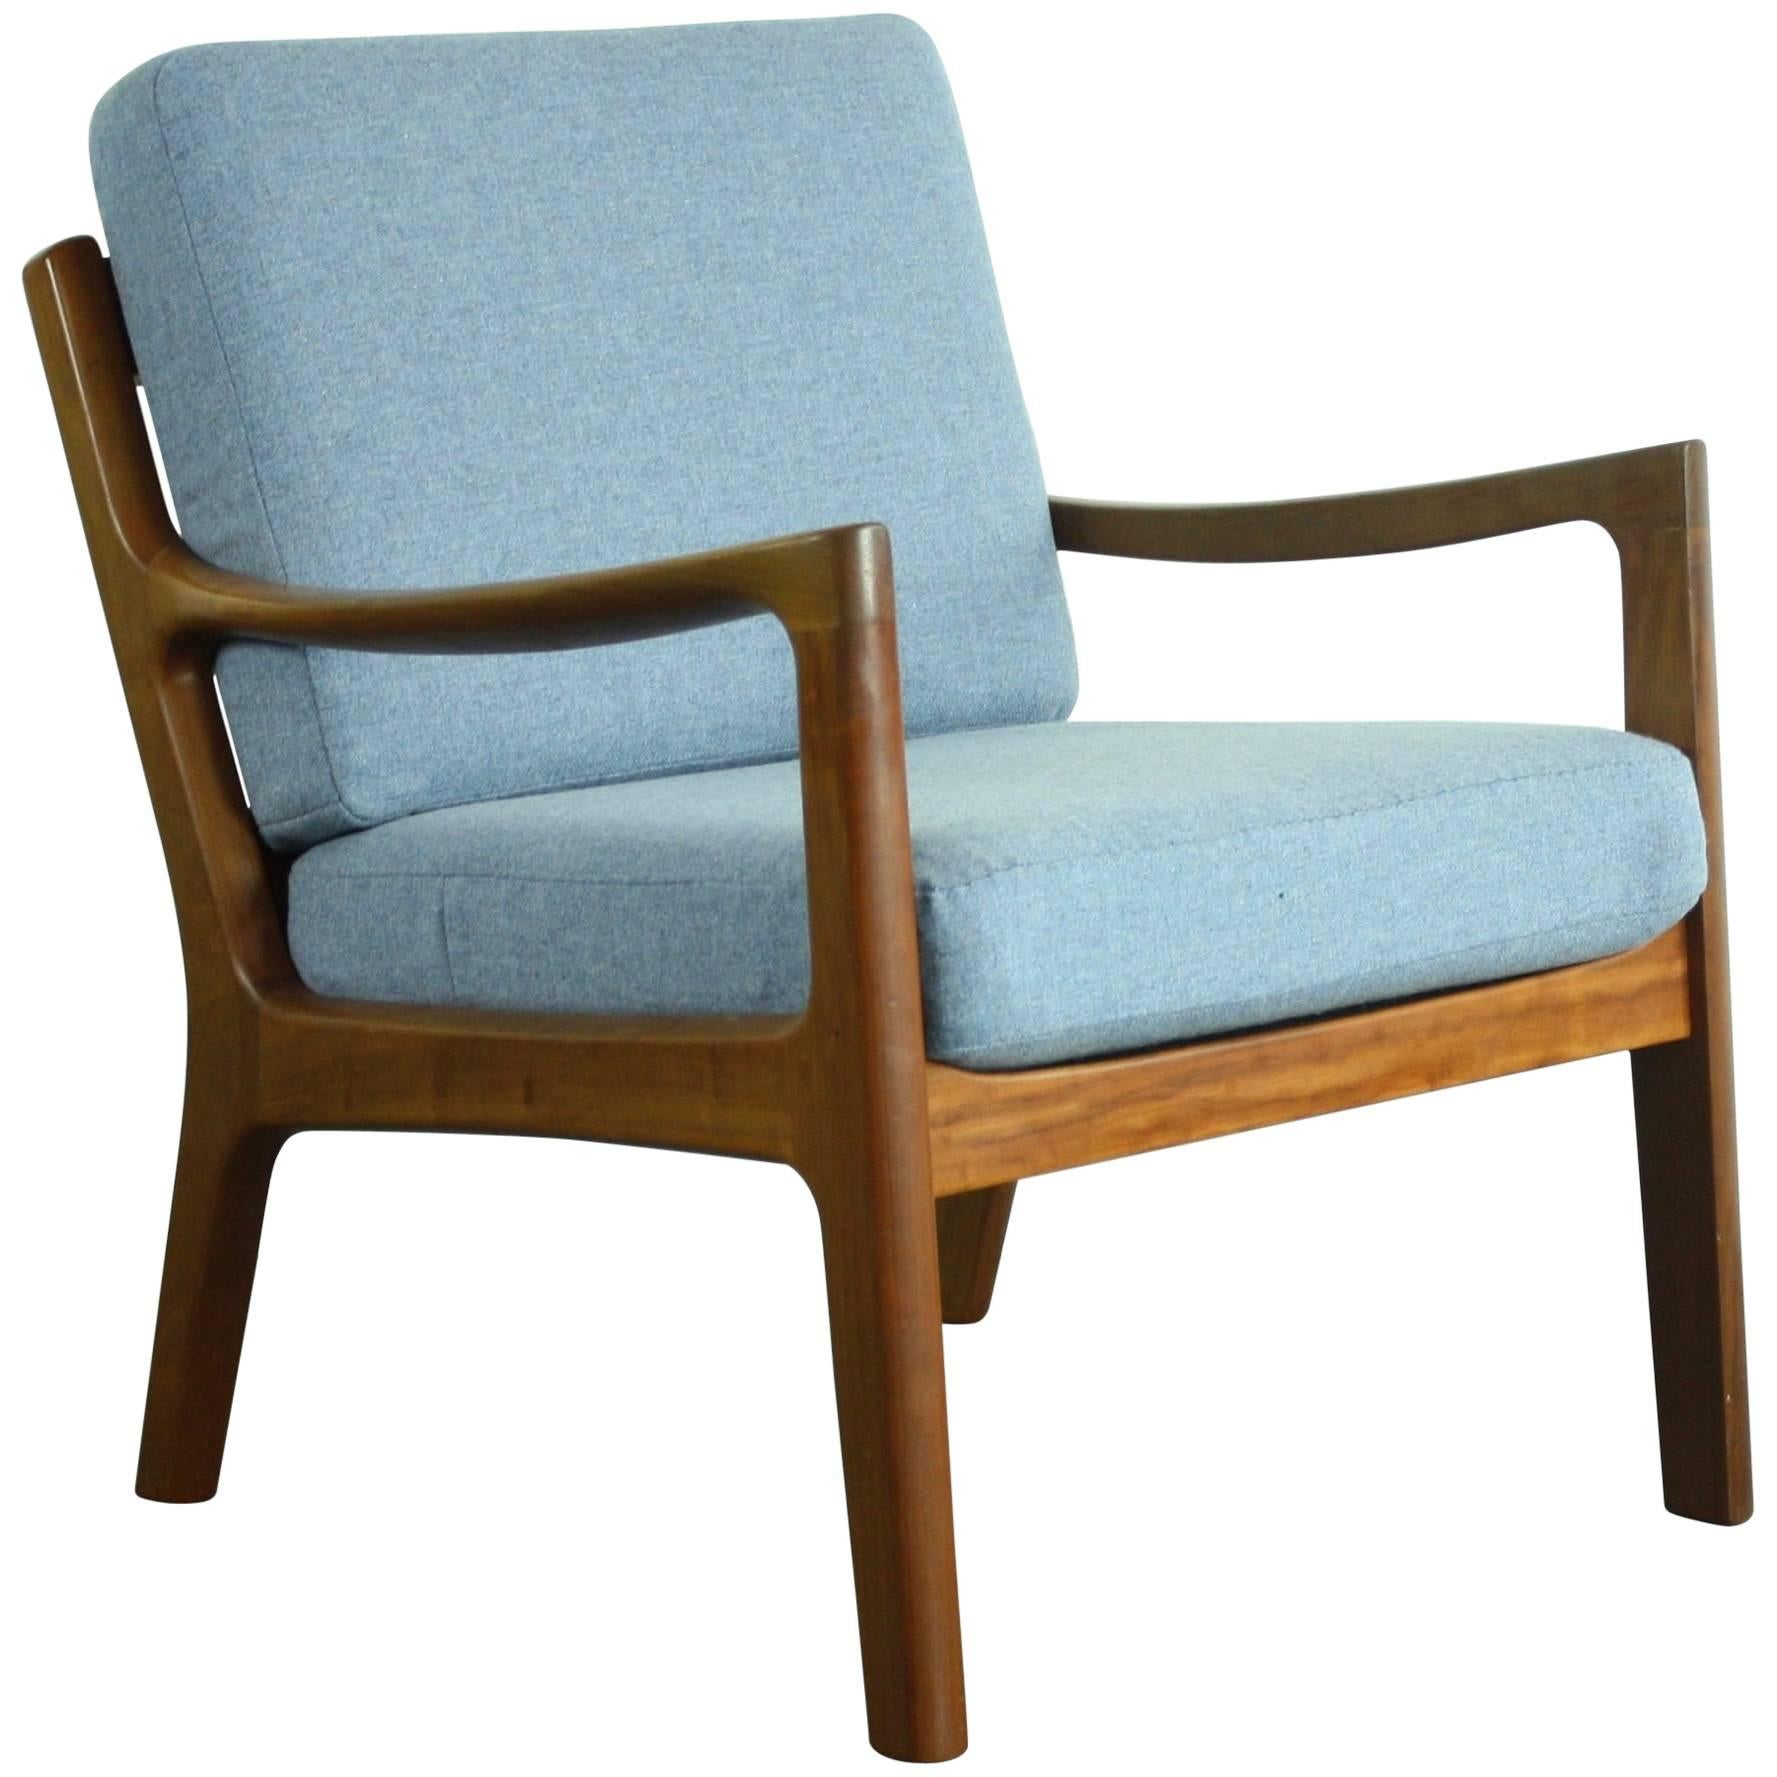 Ole Wanscher for France & Son Denmark, 1960s Teak Lounge Chair Blue Upholstery For Sale